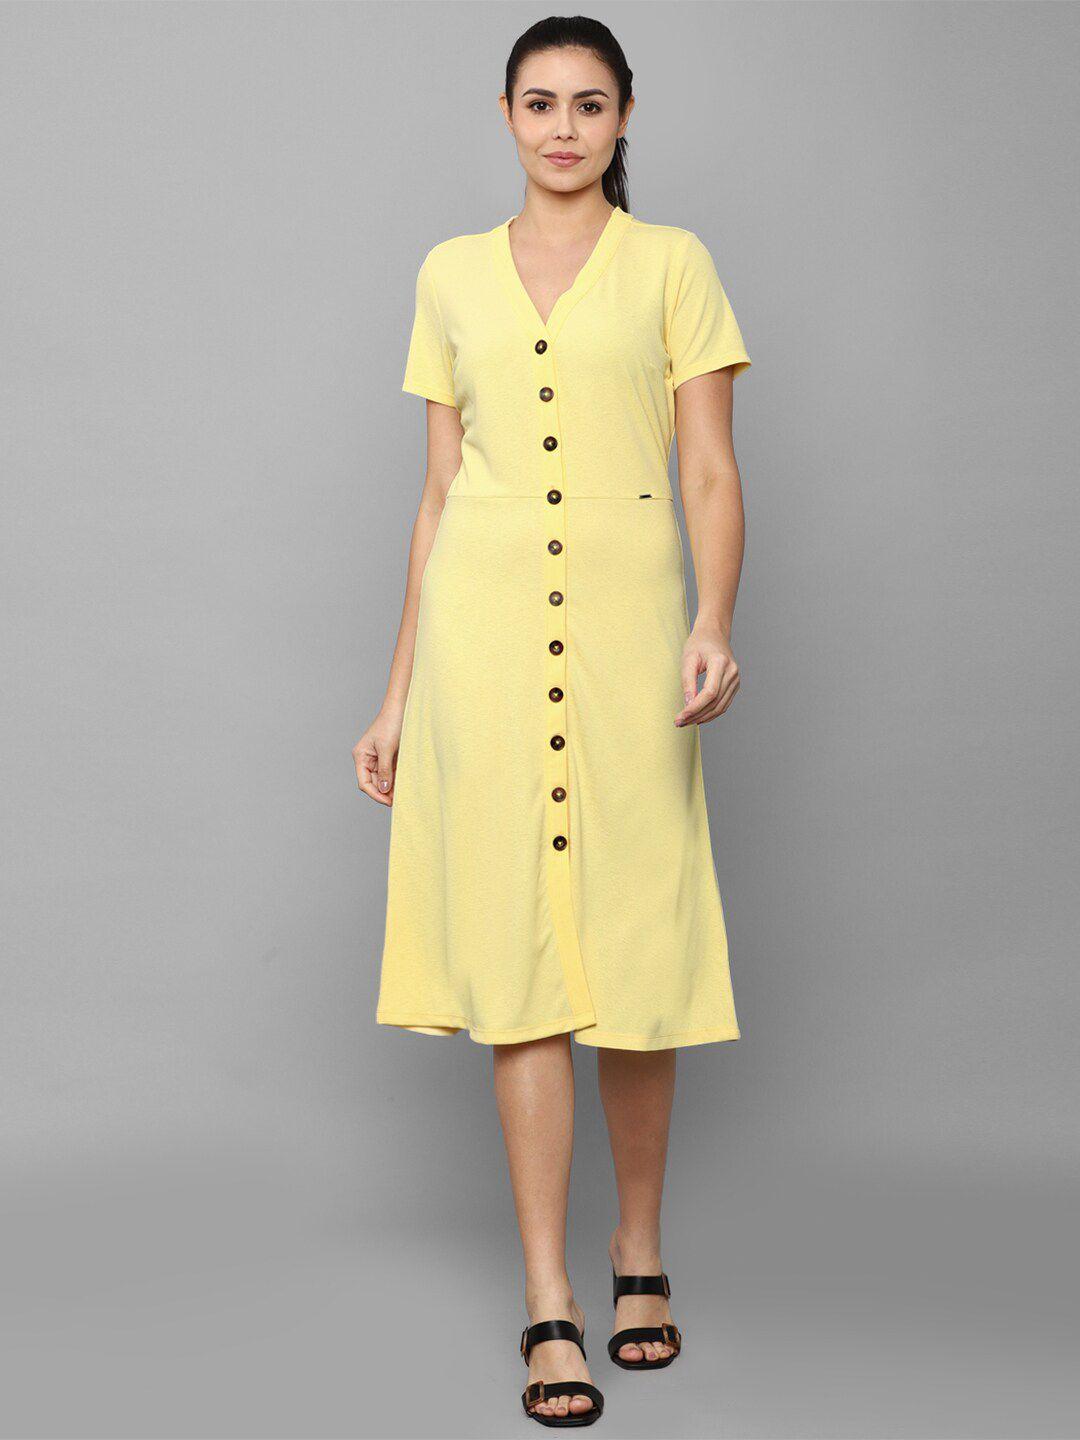 allen solly woman yellow a-line midi dress